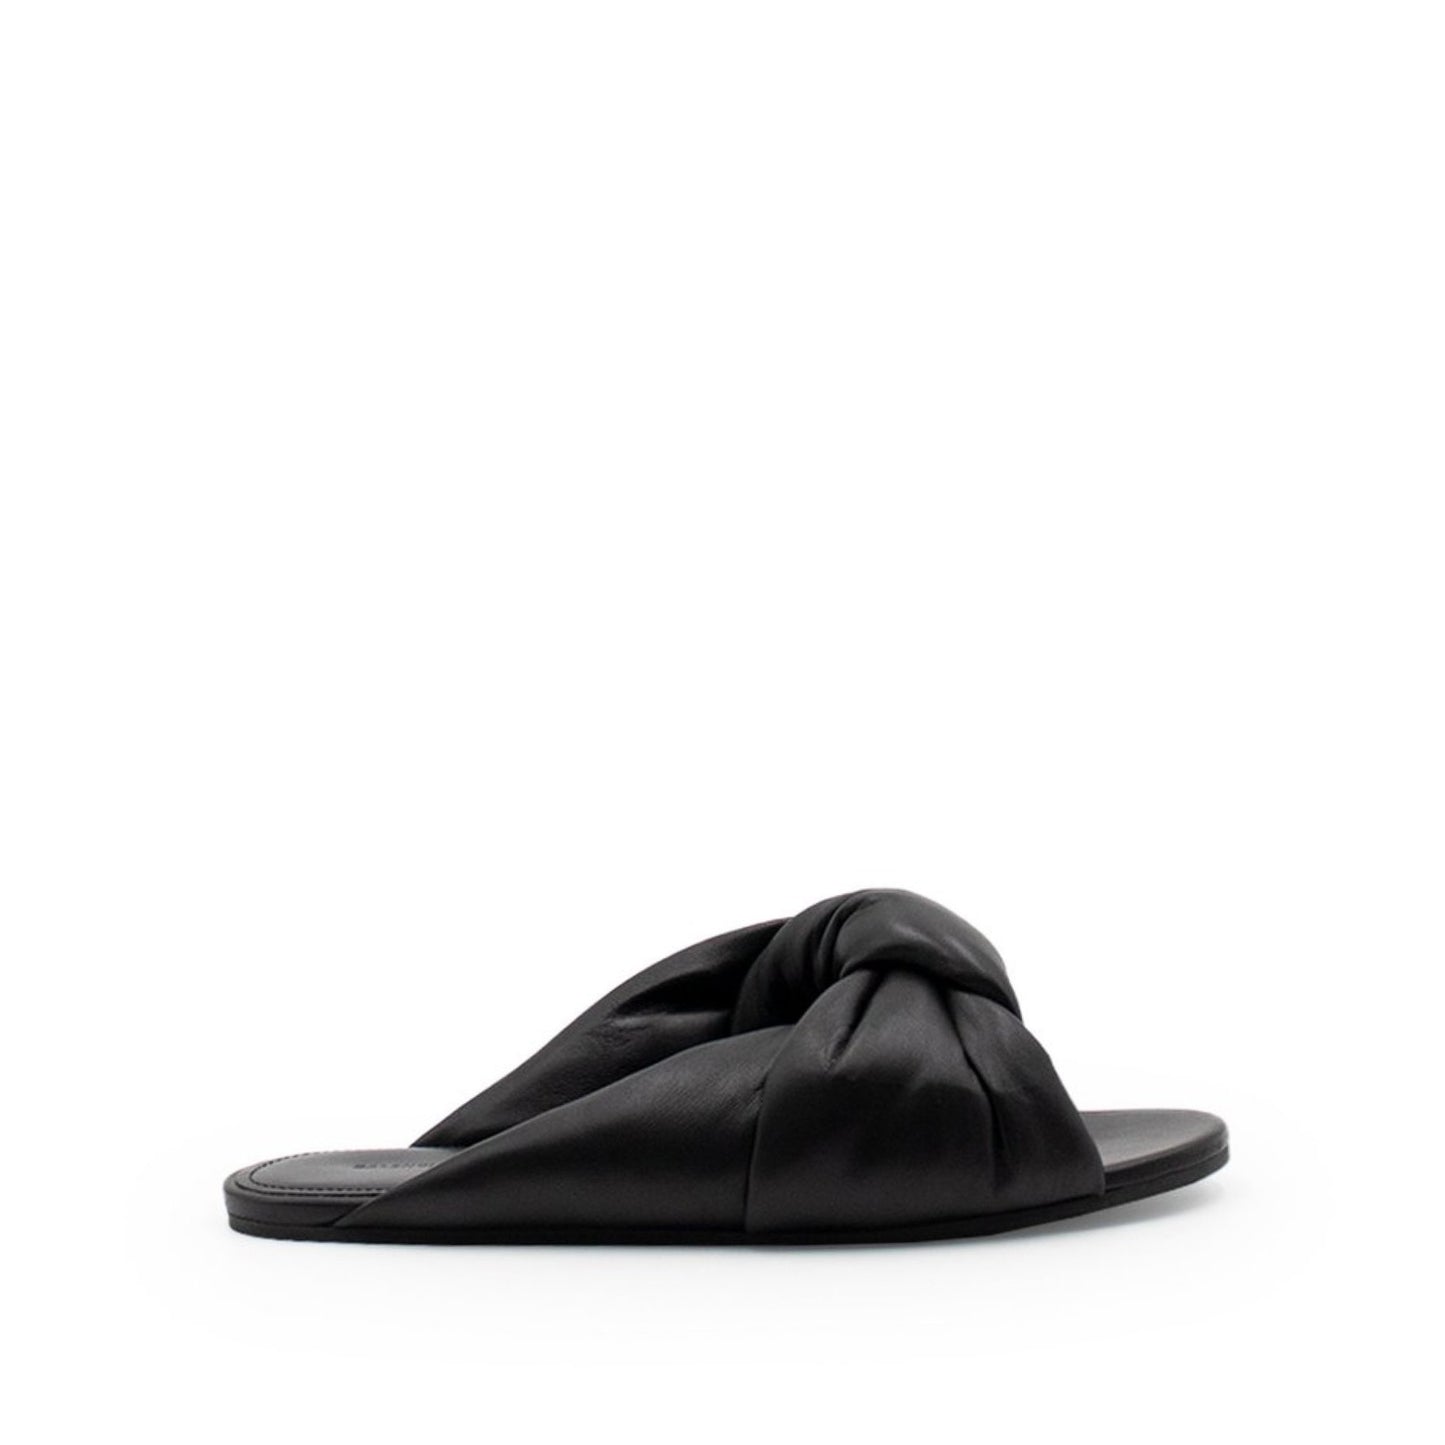 Drapy Flat Sandal in Black